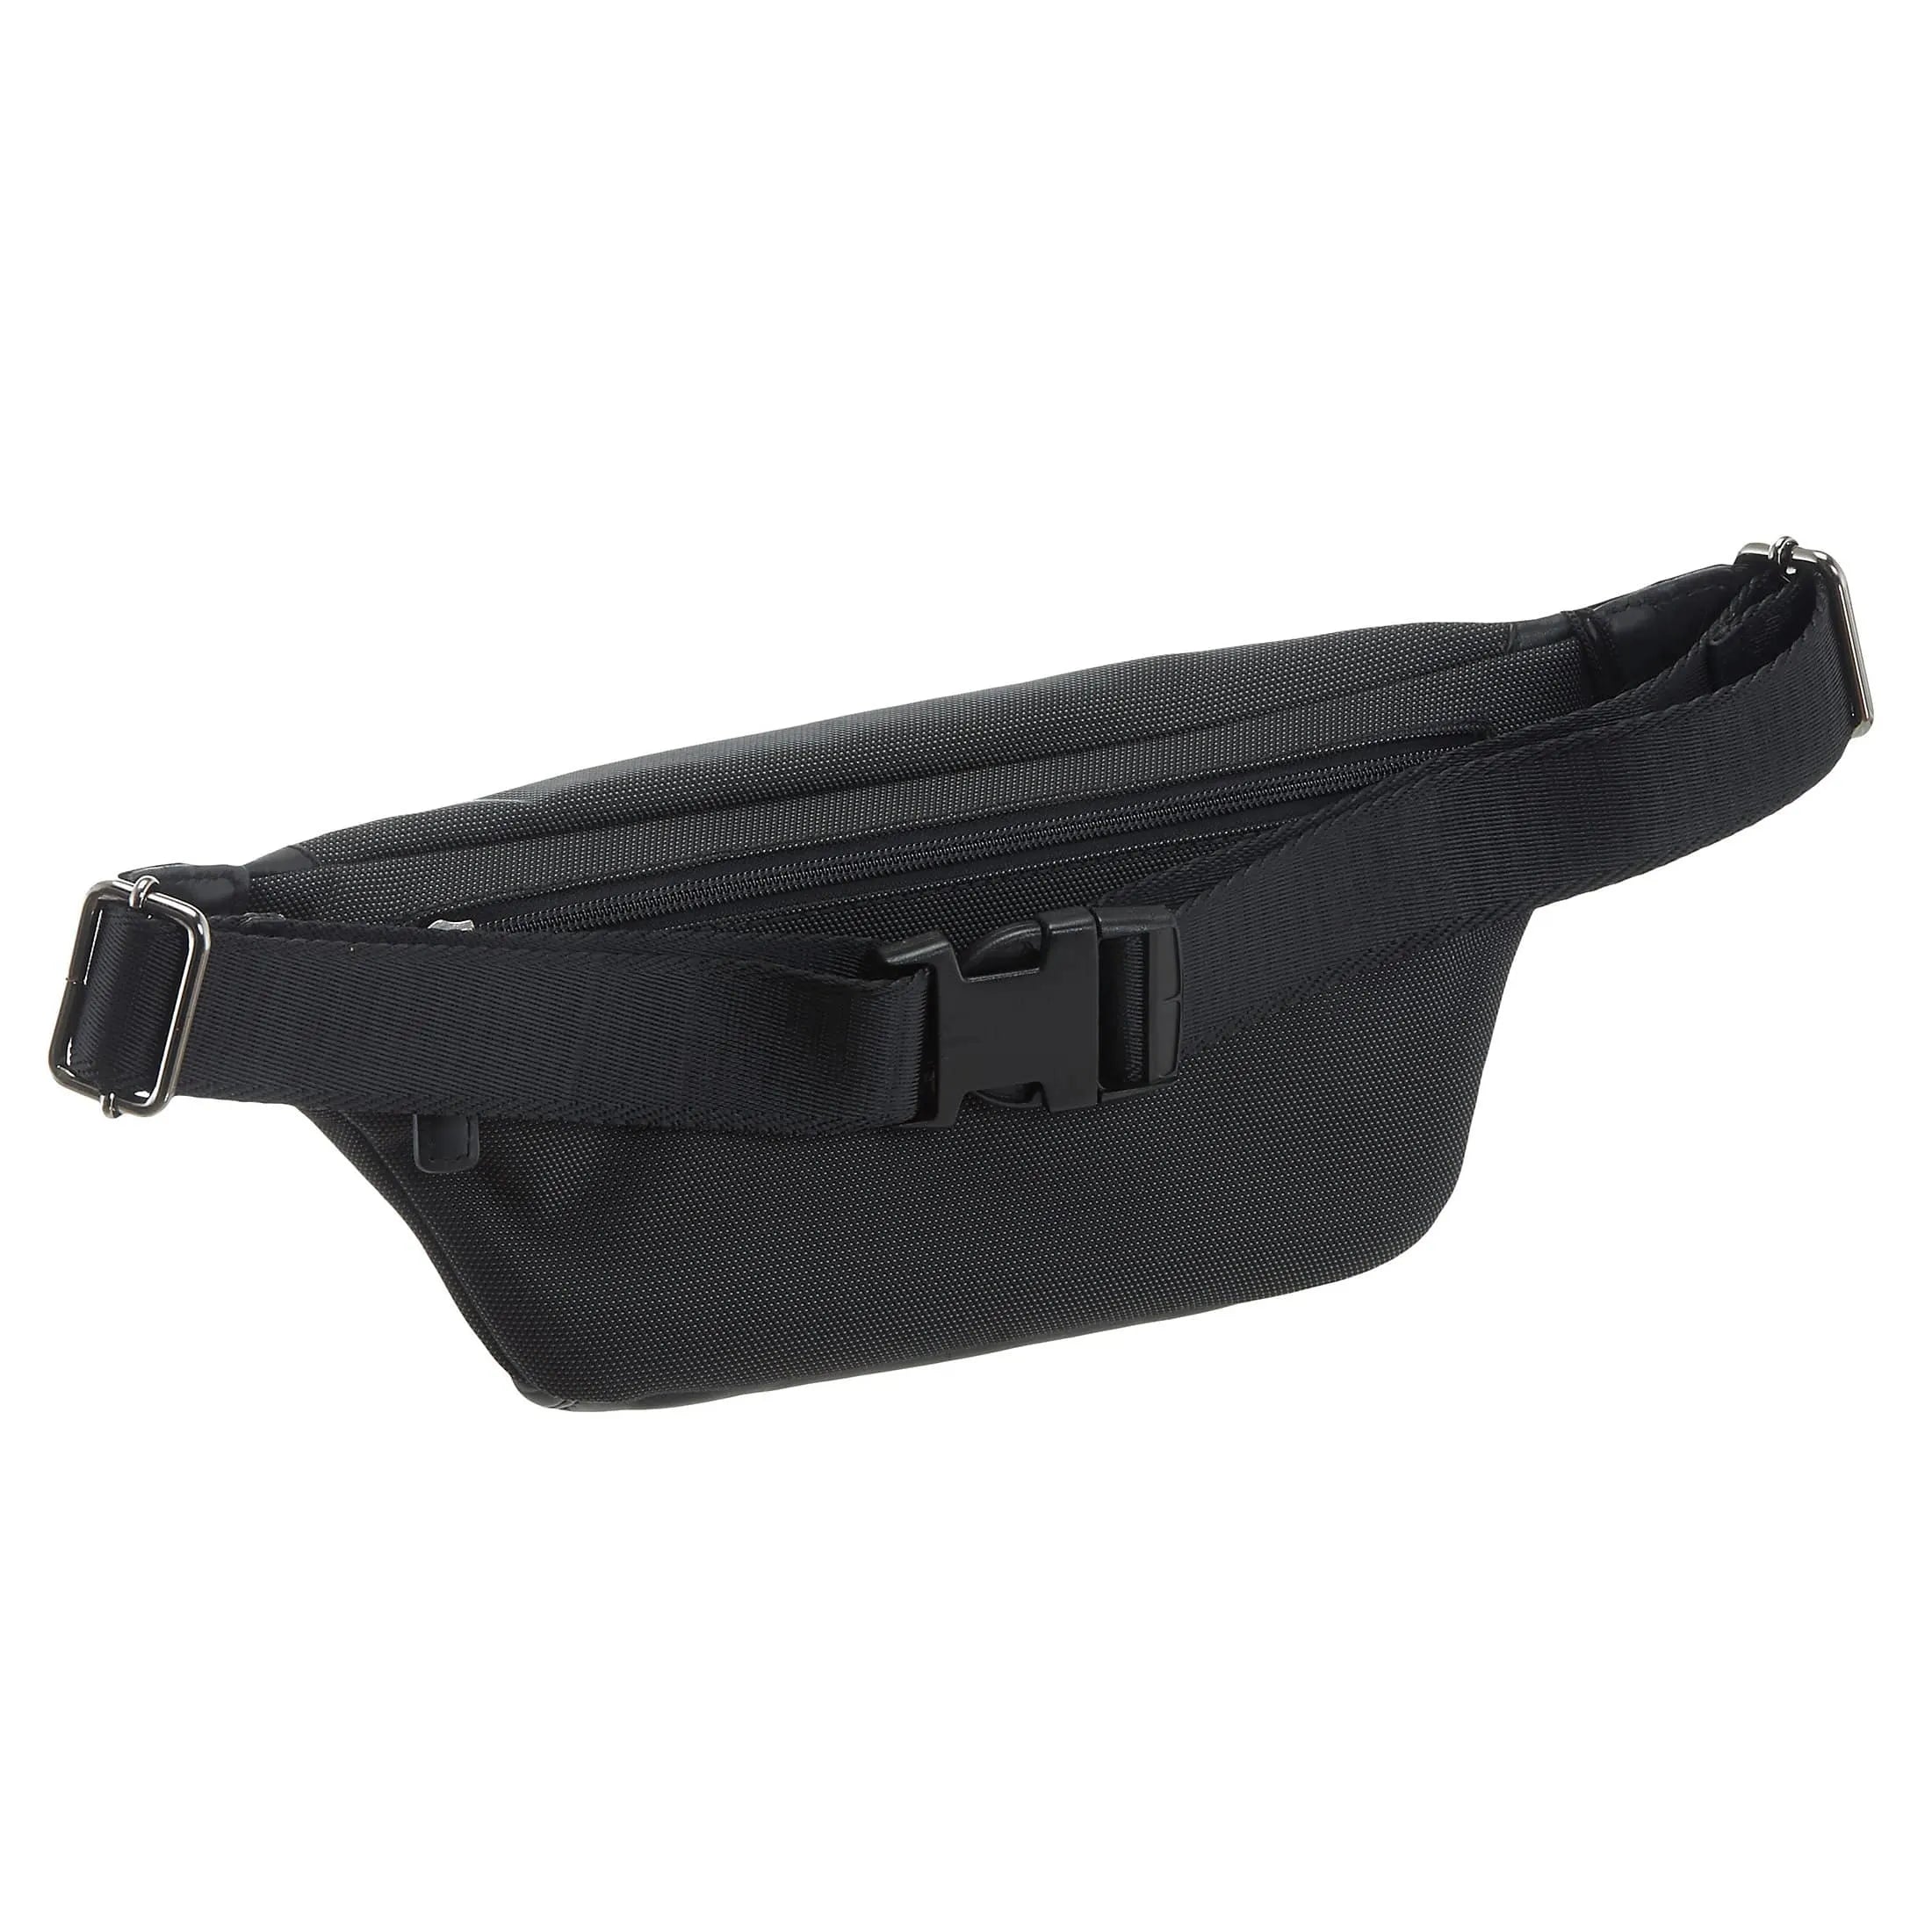 Brics Monza belt bag 38 cm - gray-black